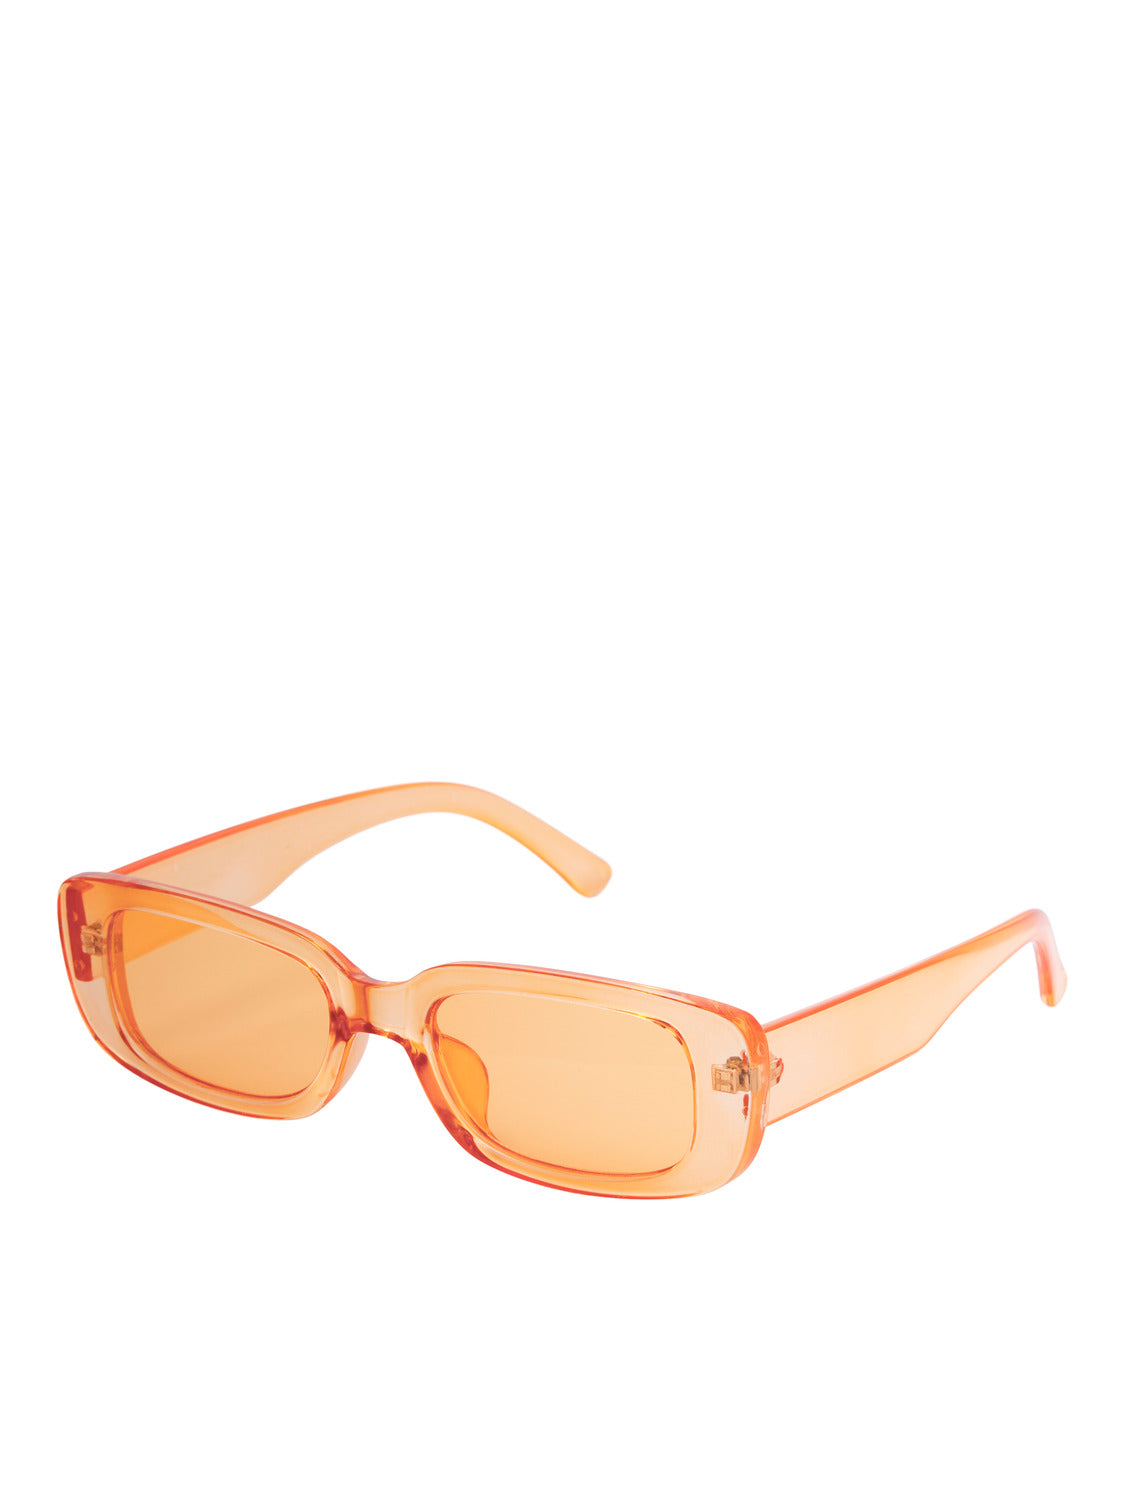 Gafas de sol naranja - JACABEL